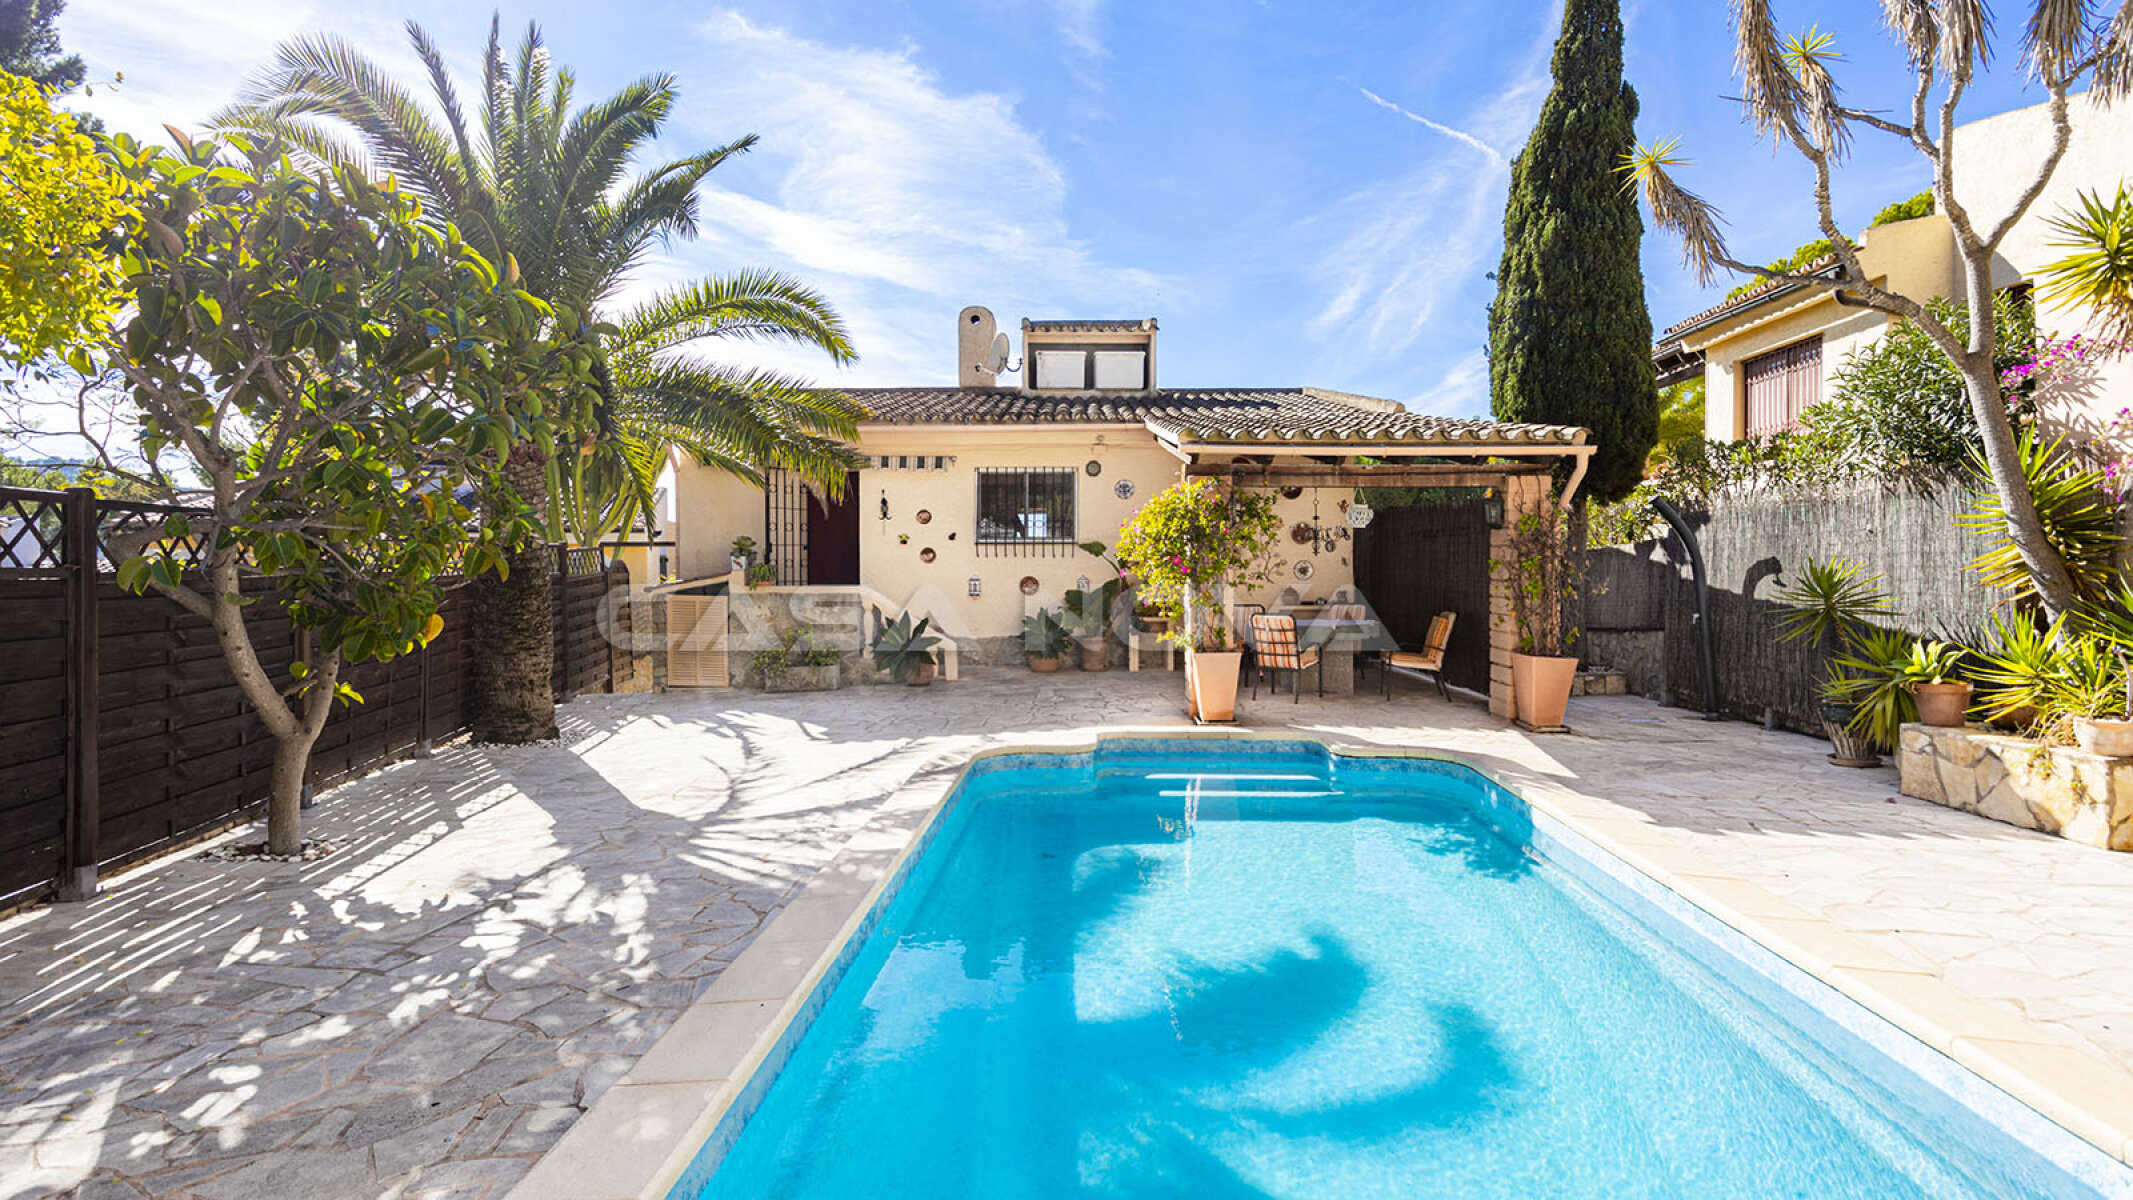 Charming Mallorca villa with private pool and garden